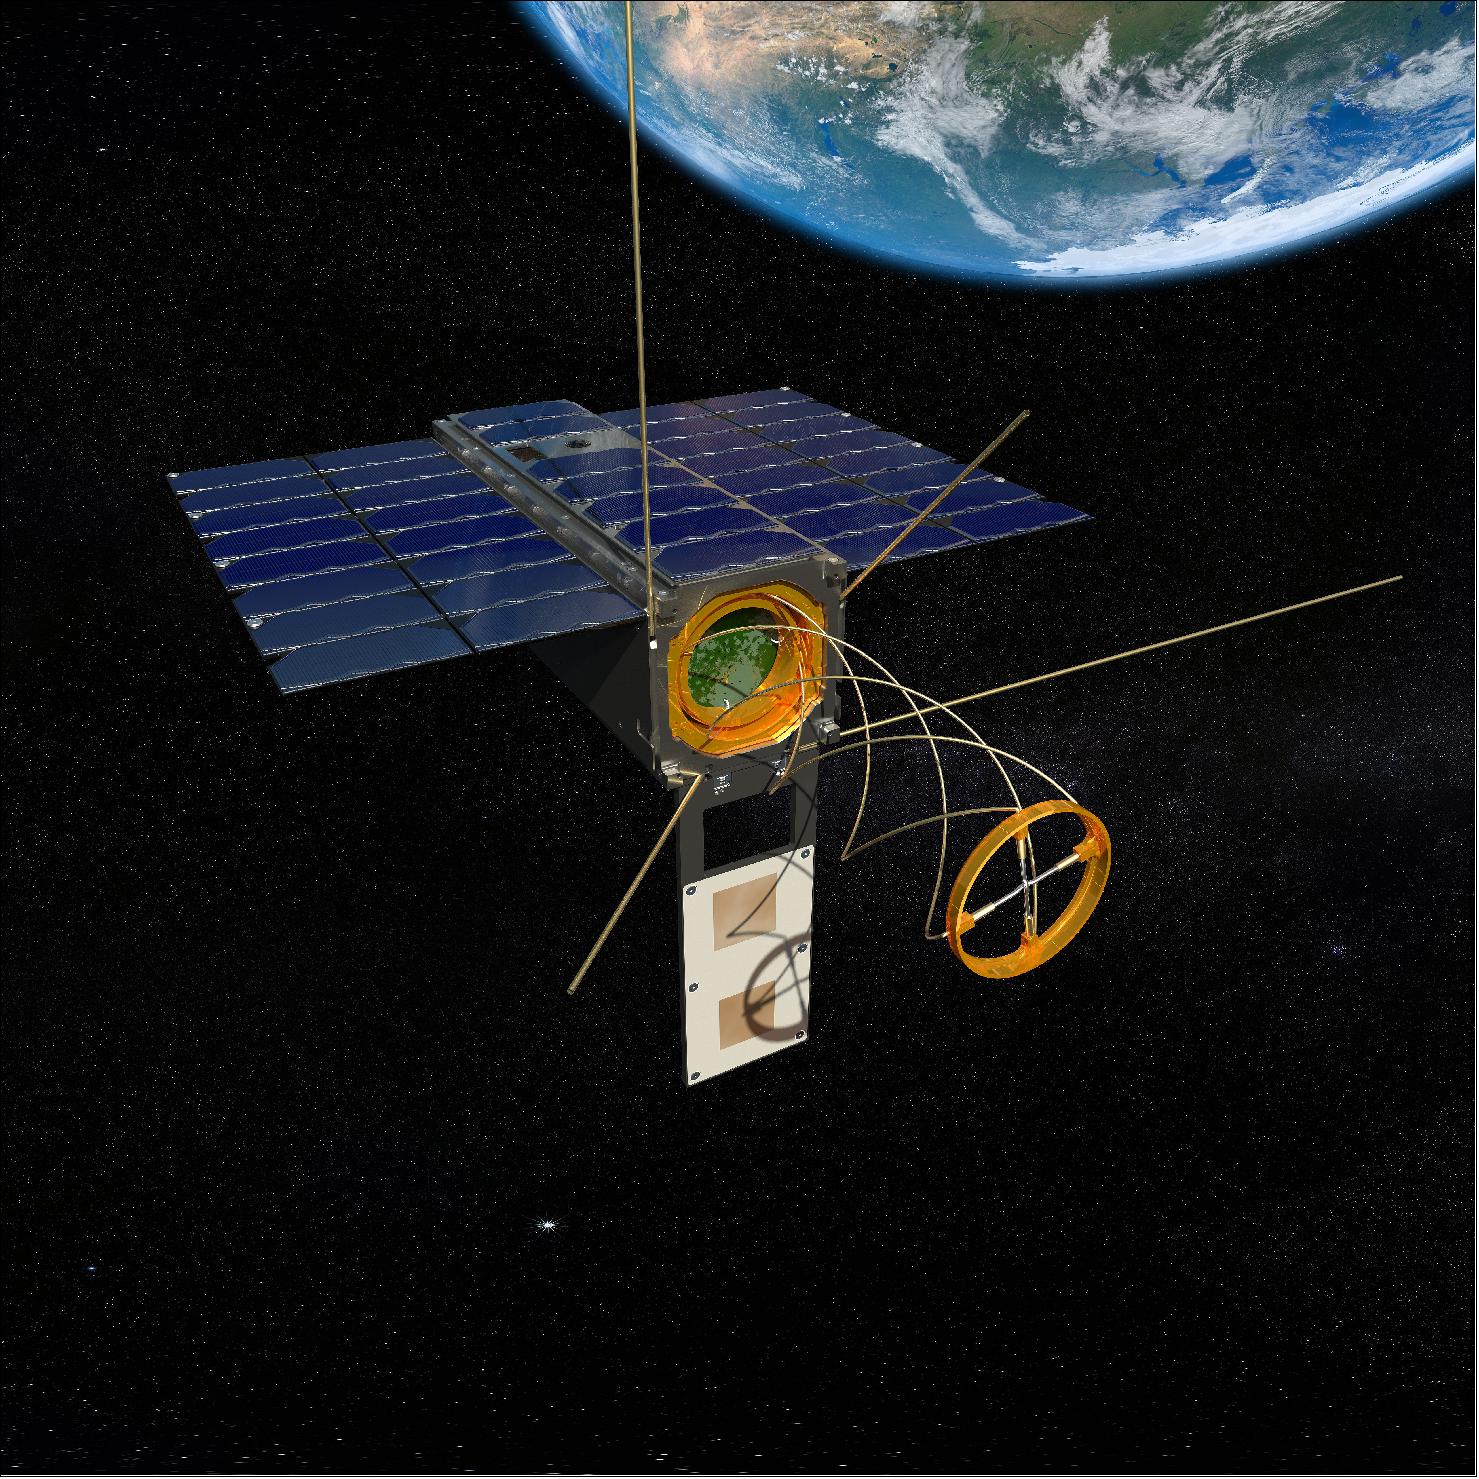 Figure 7: Illustration of the deployed 3U CubeSat (image credit: Hiber)